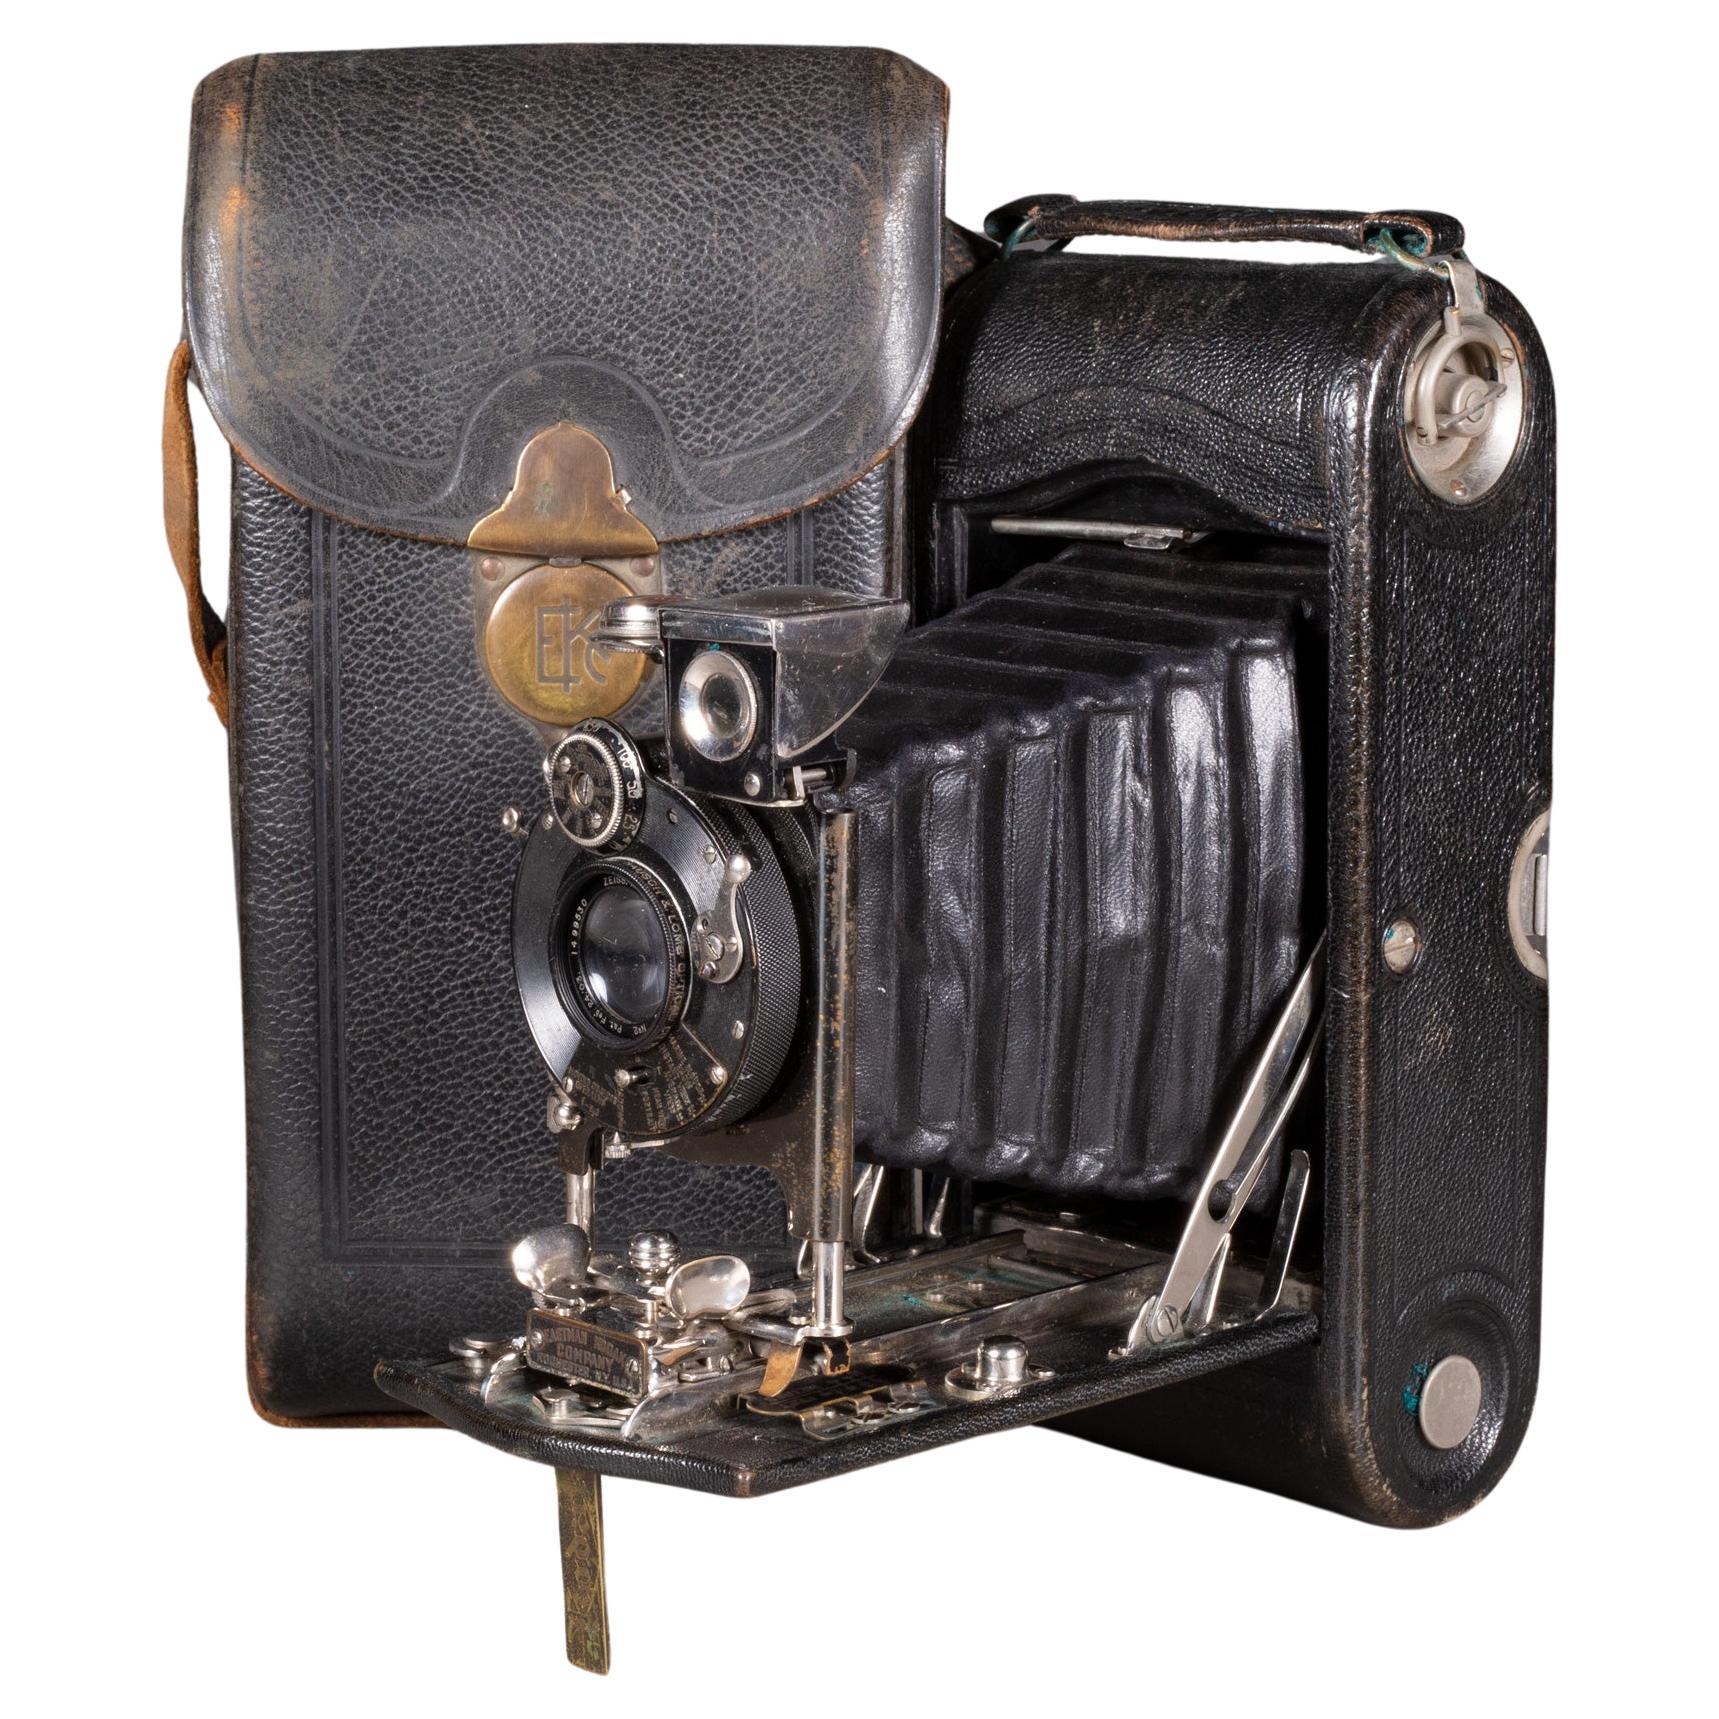 Large Kodak No. 2 Folding Camera with Leather Case c.1903 (FREE SHIPPING) For Sale